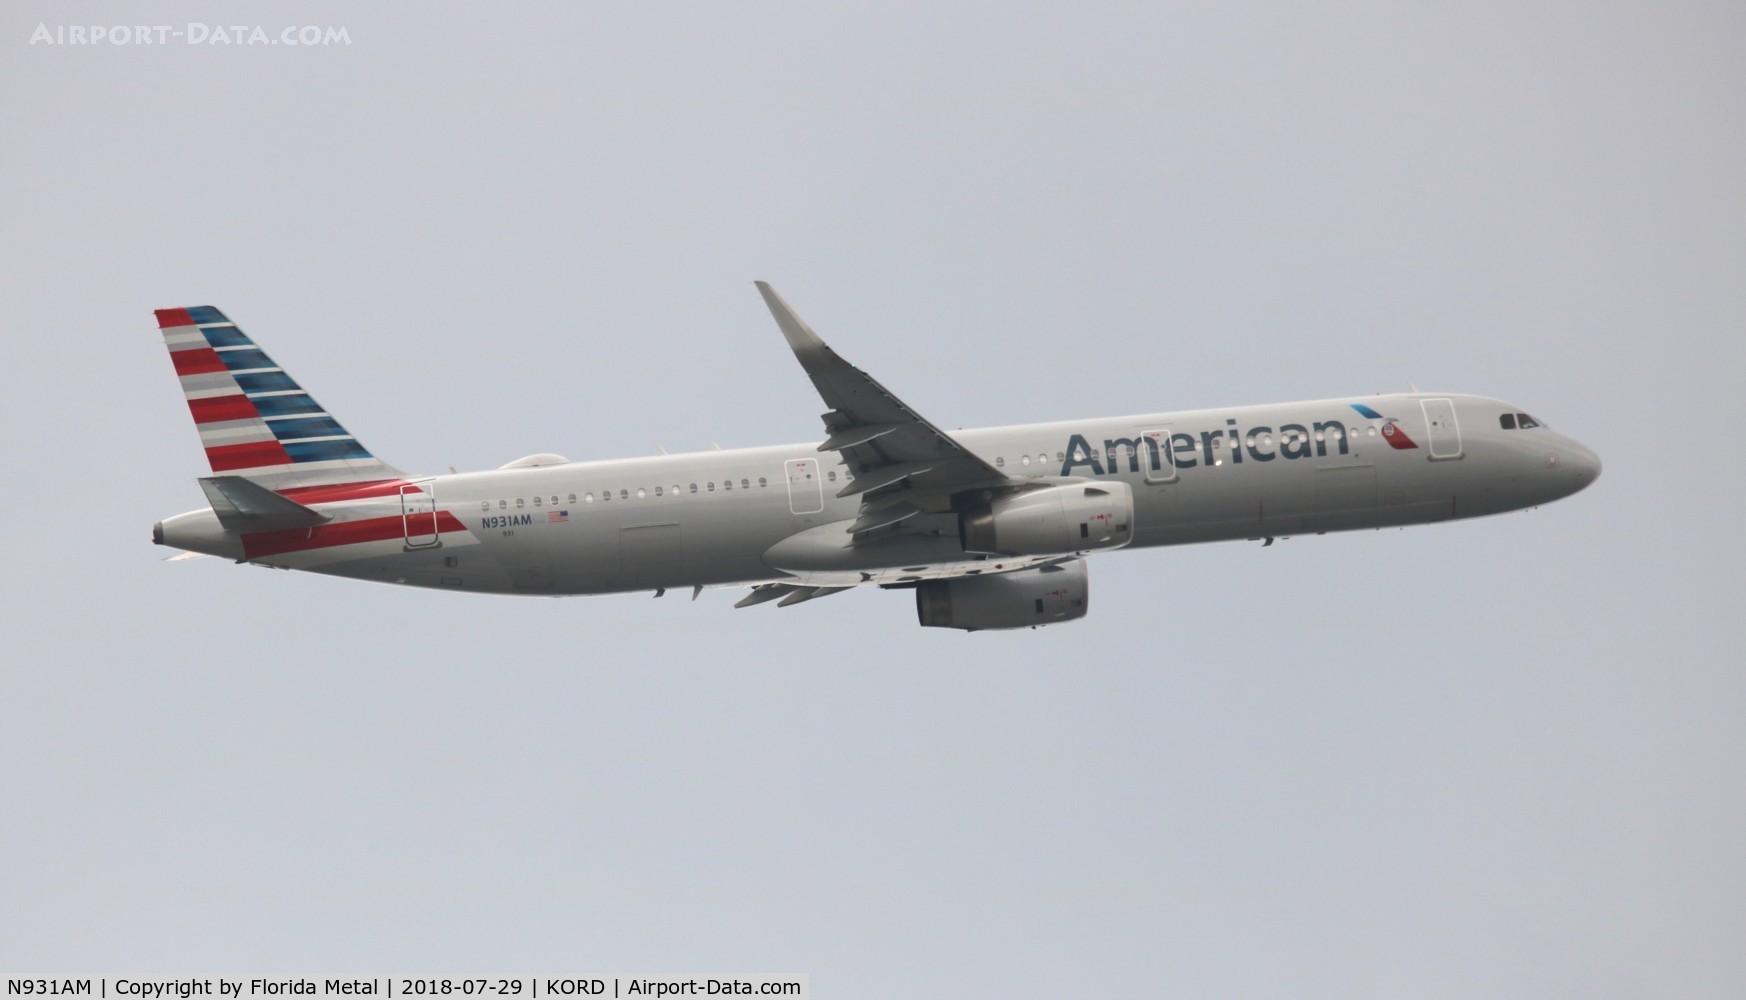 N931AM, 2017 Airbus A321-231 C/N 7541, ORD spotting